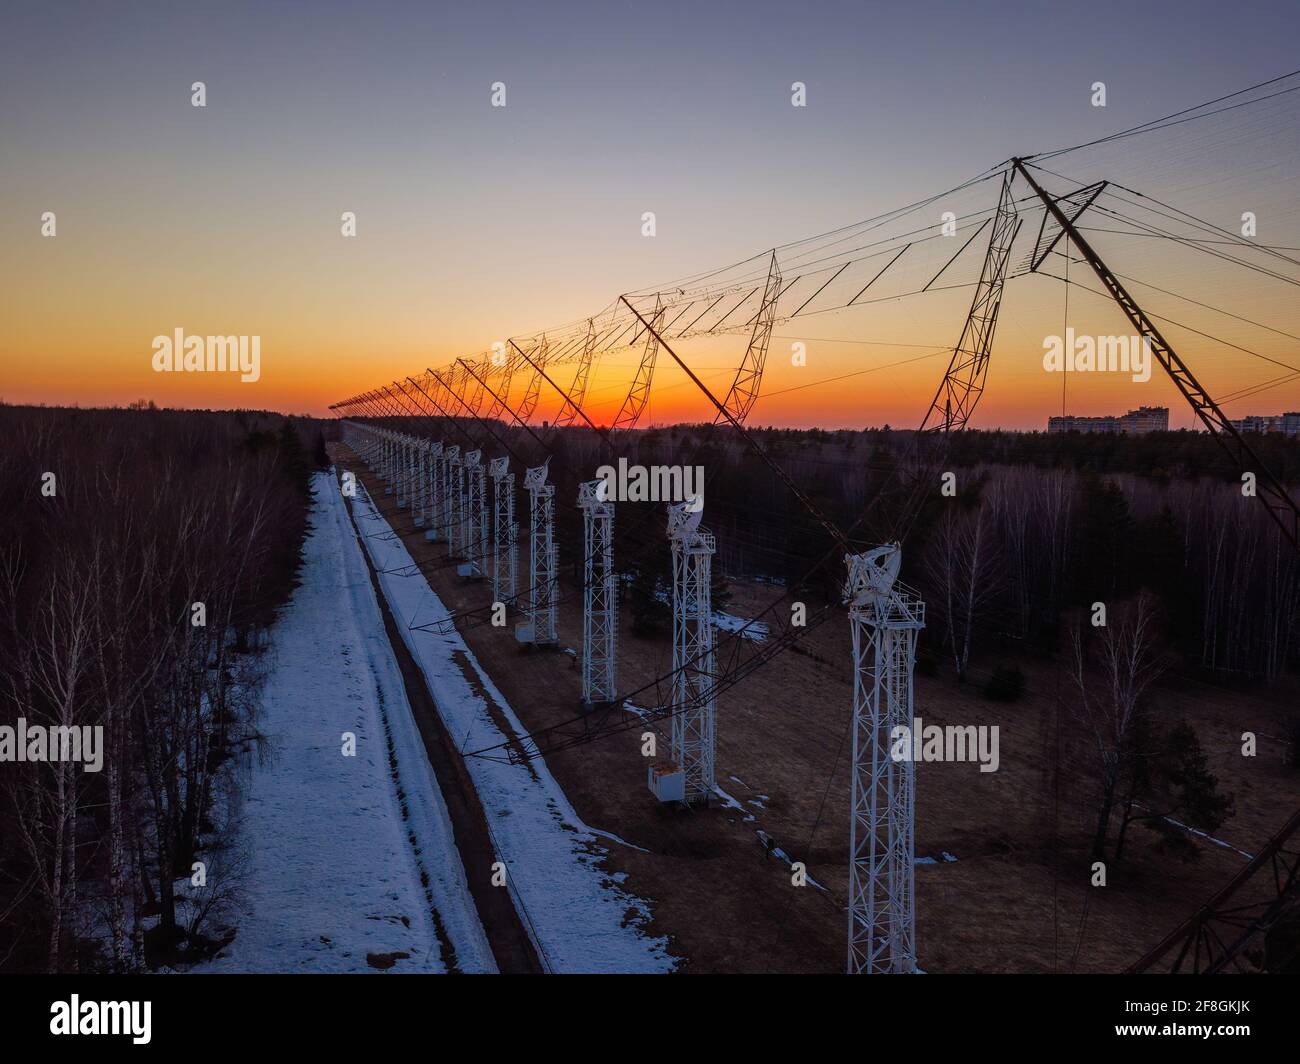 Antenna Array. A long row of radio telescopic antennas at the sunset. Stock Photo